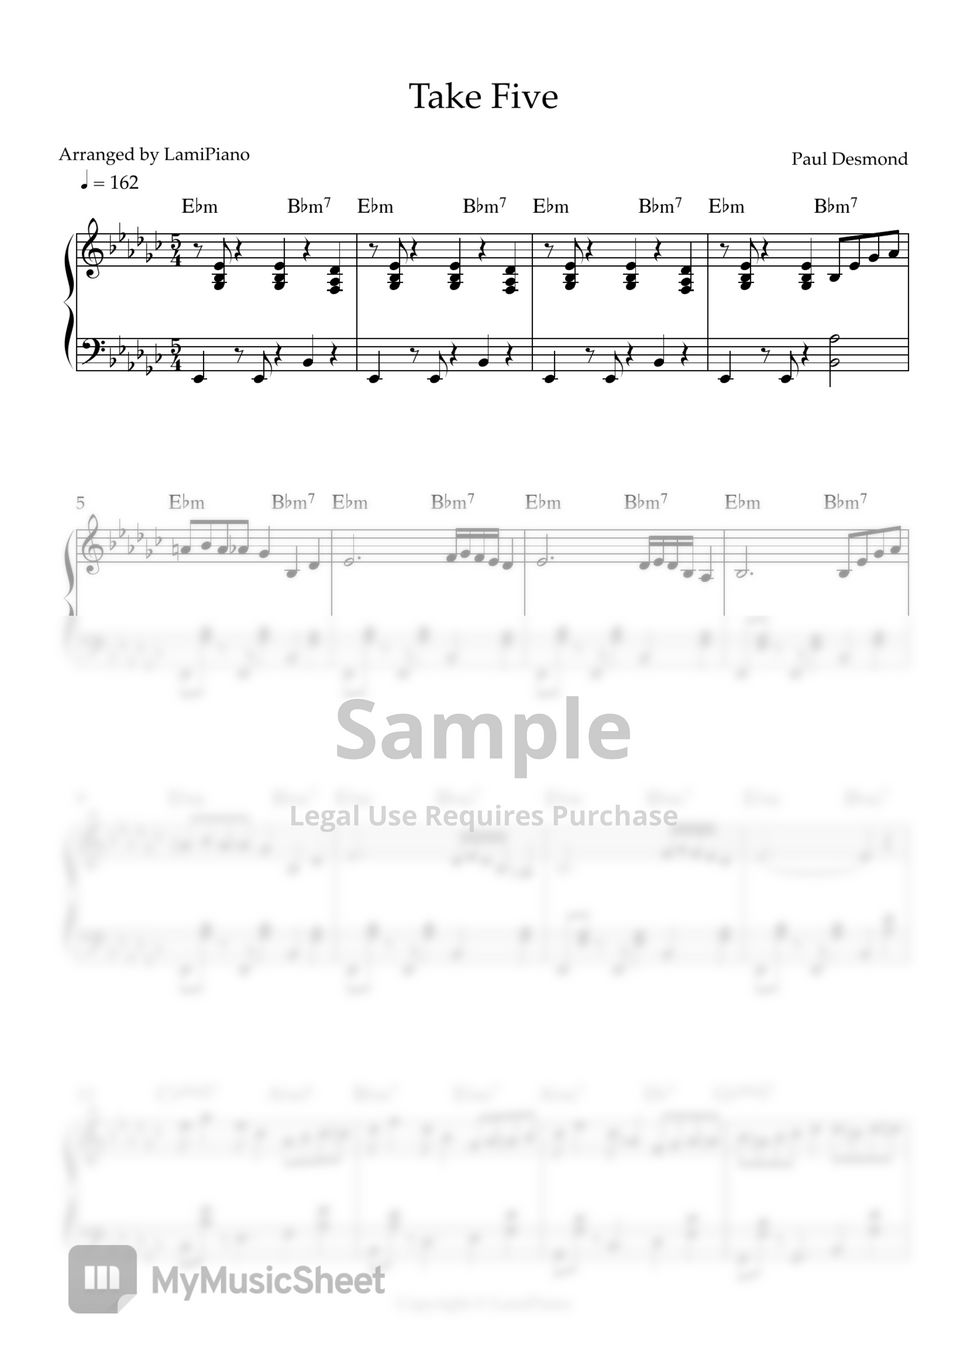 Paul Desmond - Take Five (solo piano / jazz / chords) by LamiPiano